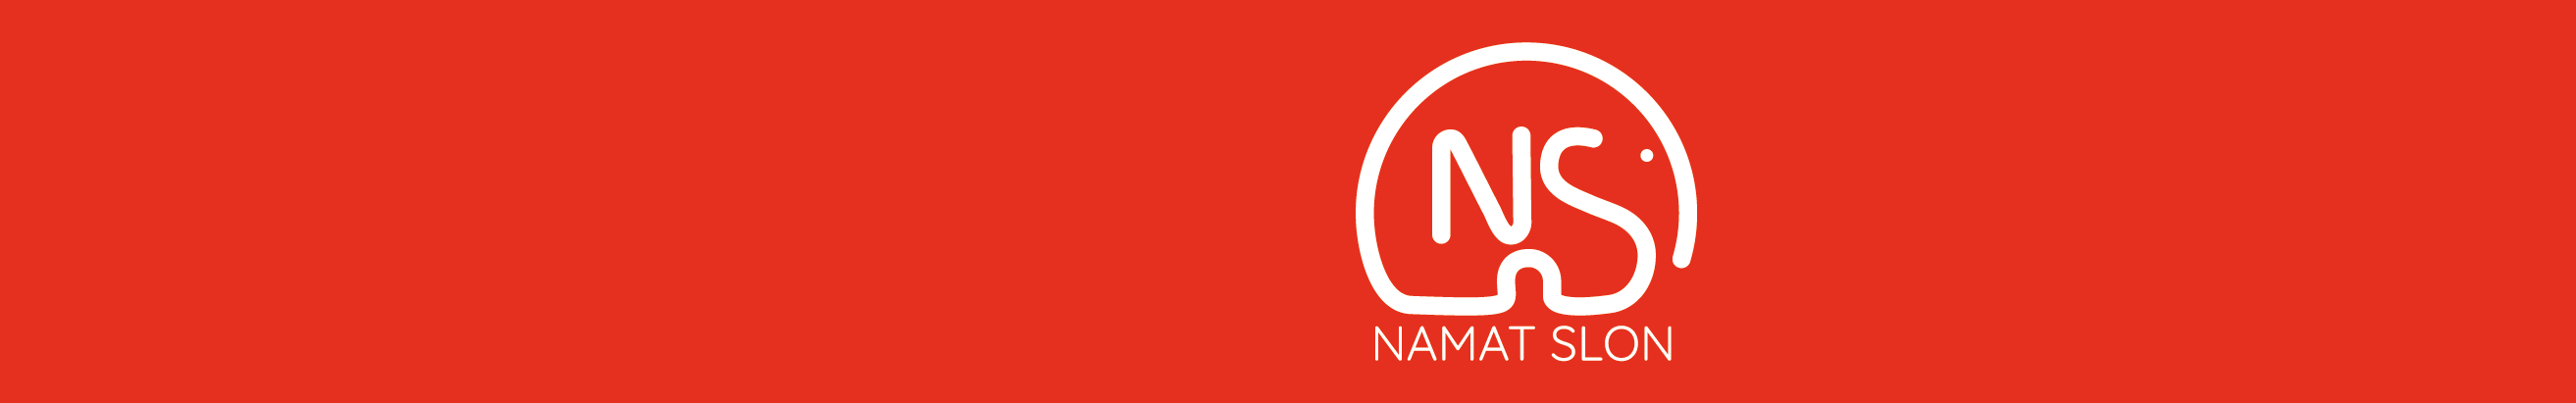 Namat Slon's profile banner